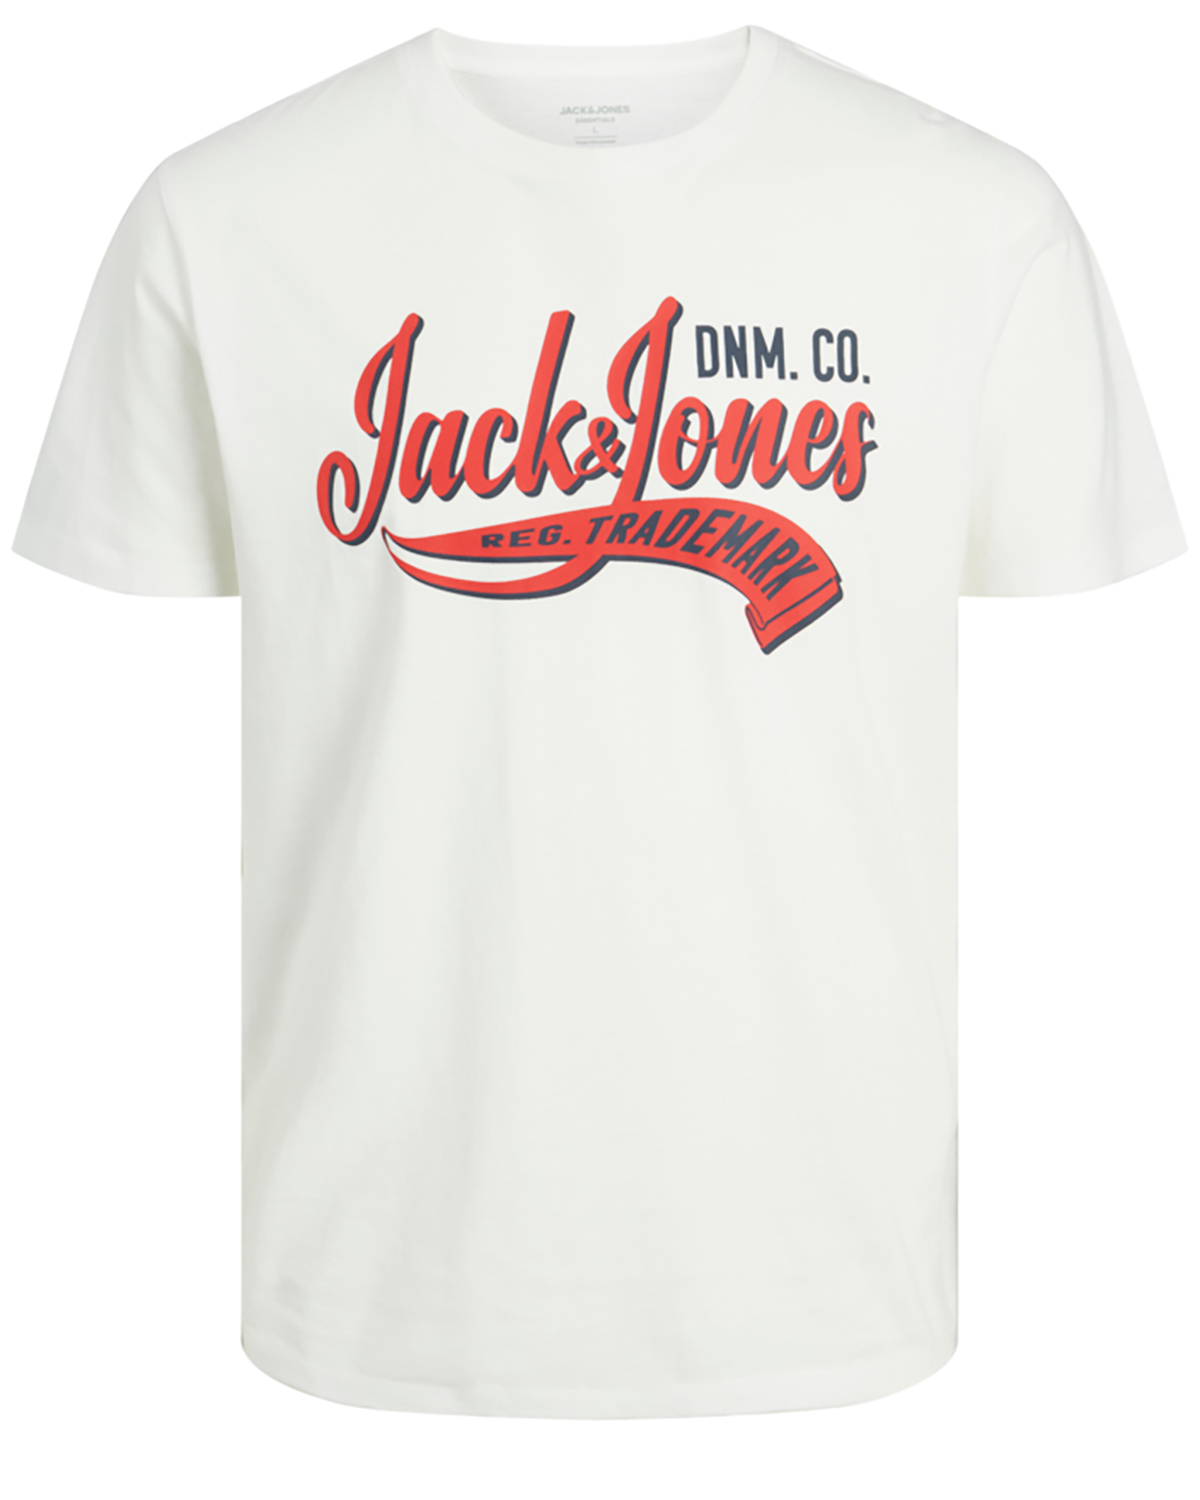 Se Jack & Jones JR t-shirt s/s, Logo tee, hvid - 140,10år hos Umame.dk